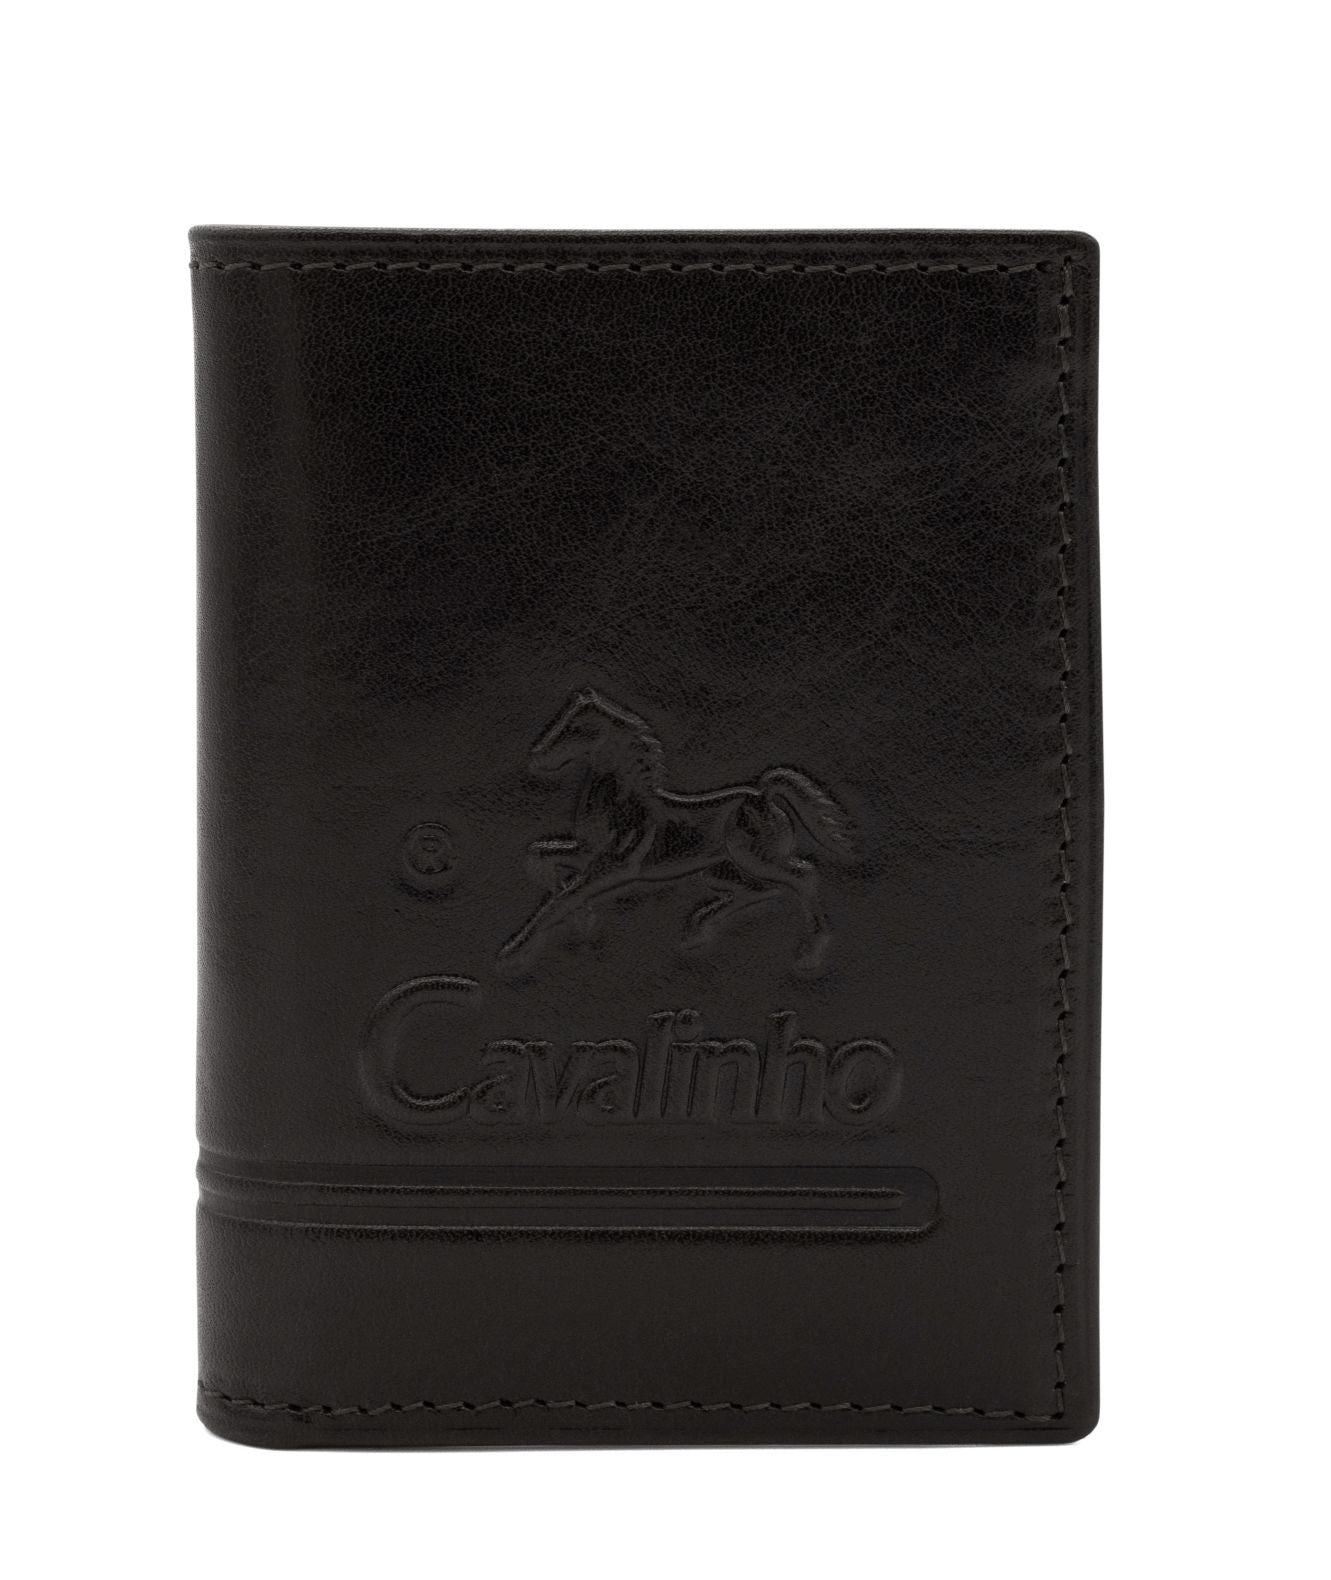 Cavalinho Men's Bifold Slim Leather Wallet - Black - 28610533.01_1